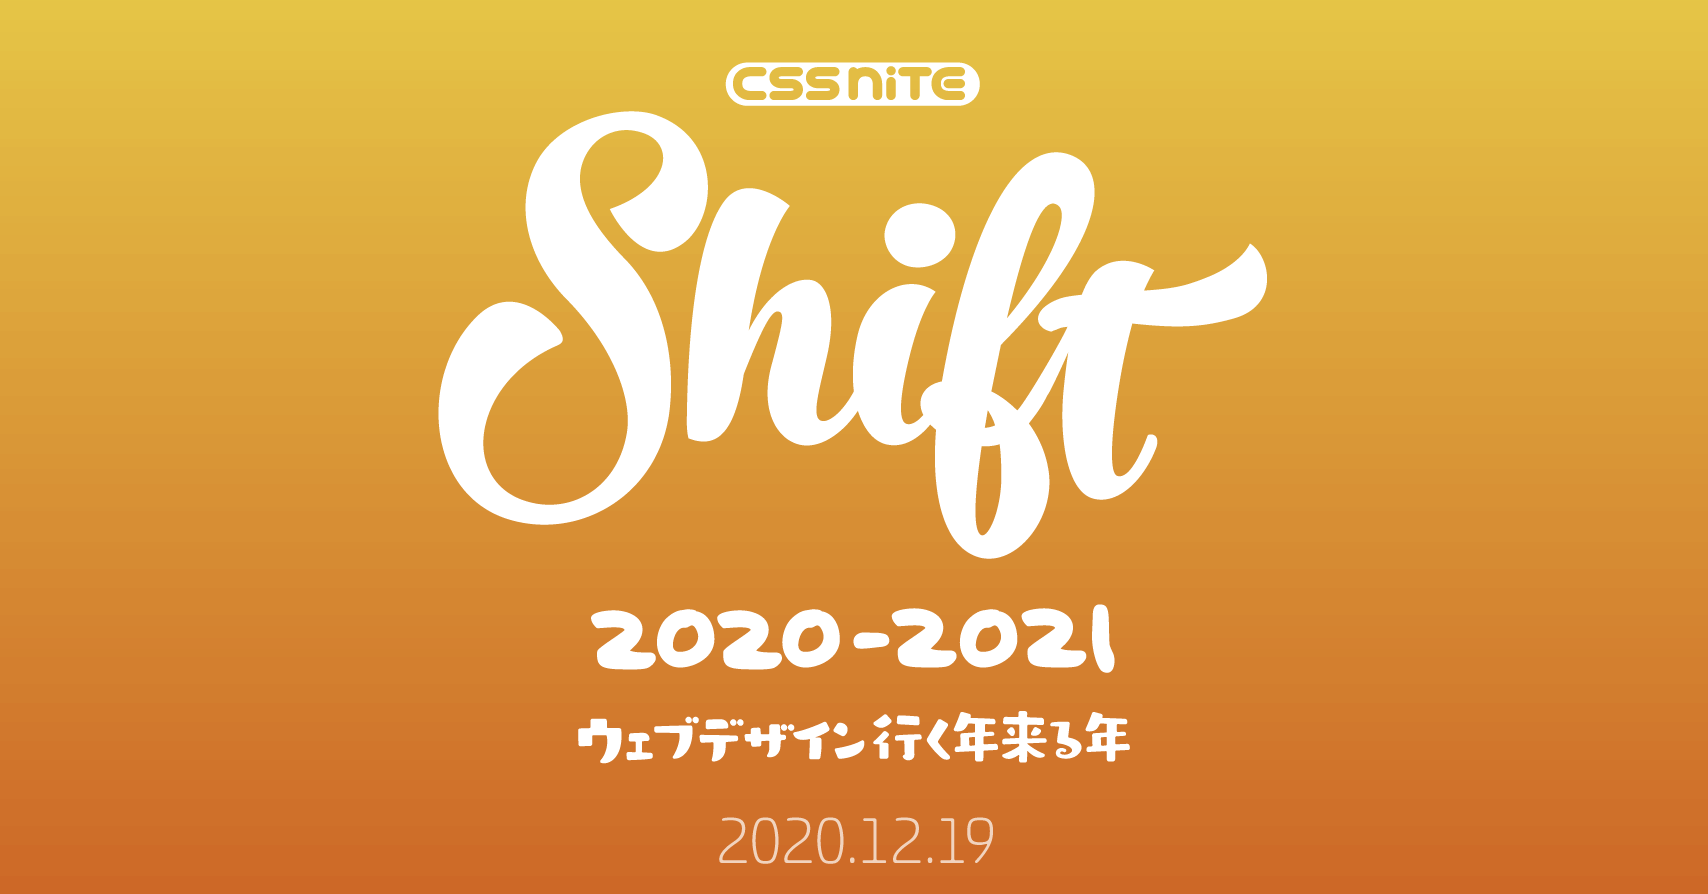 CSS Nite Shift14「ウェブデザイン、行く年来る年」